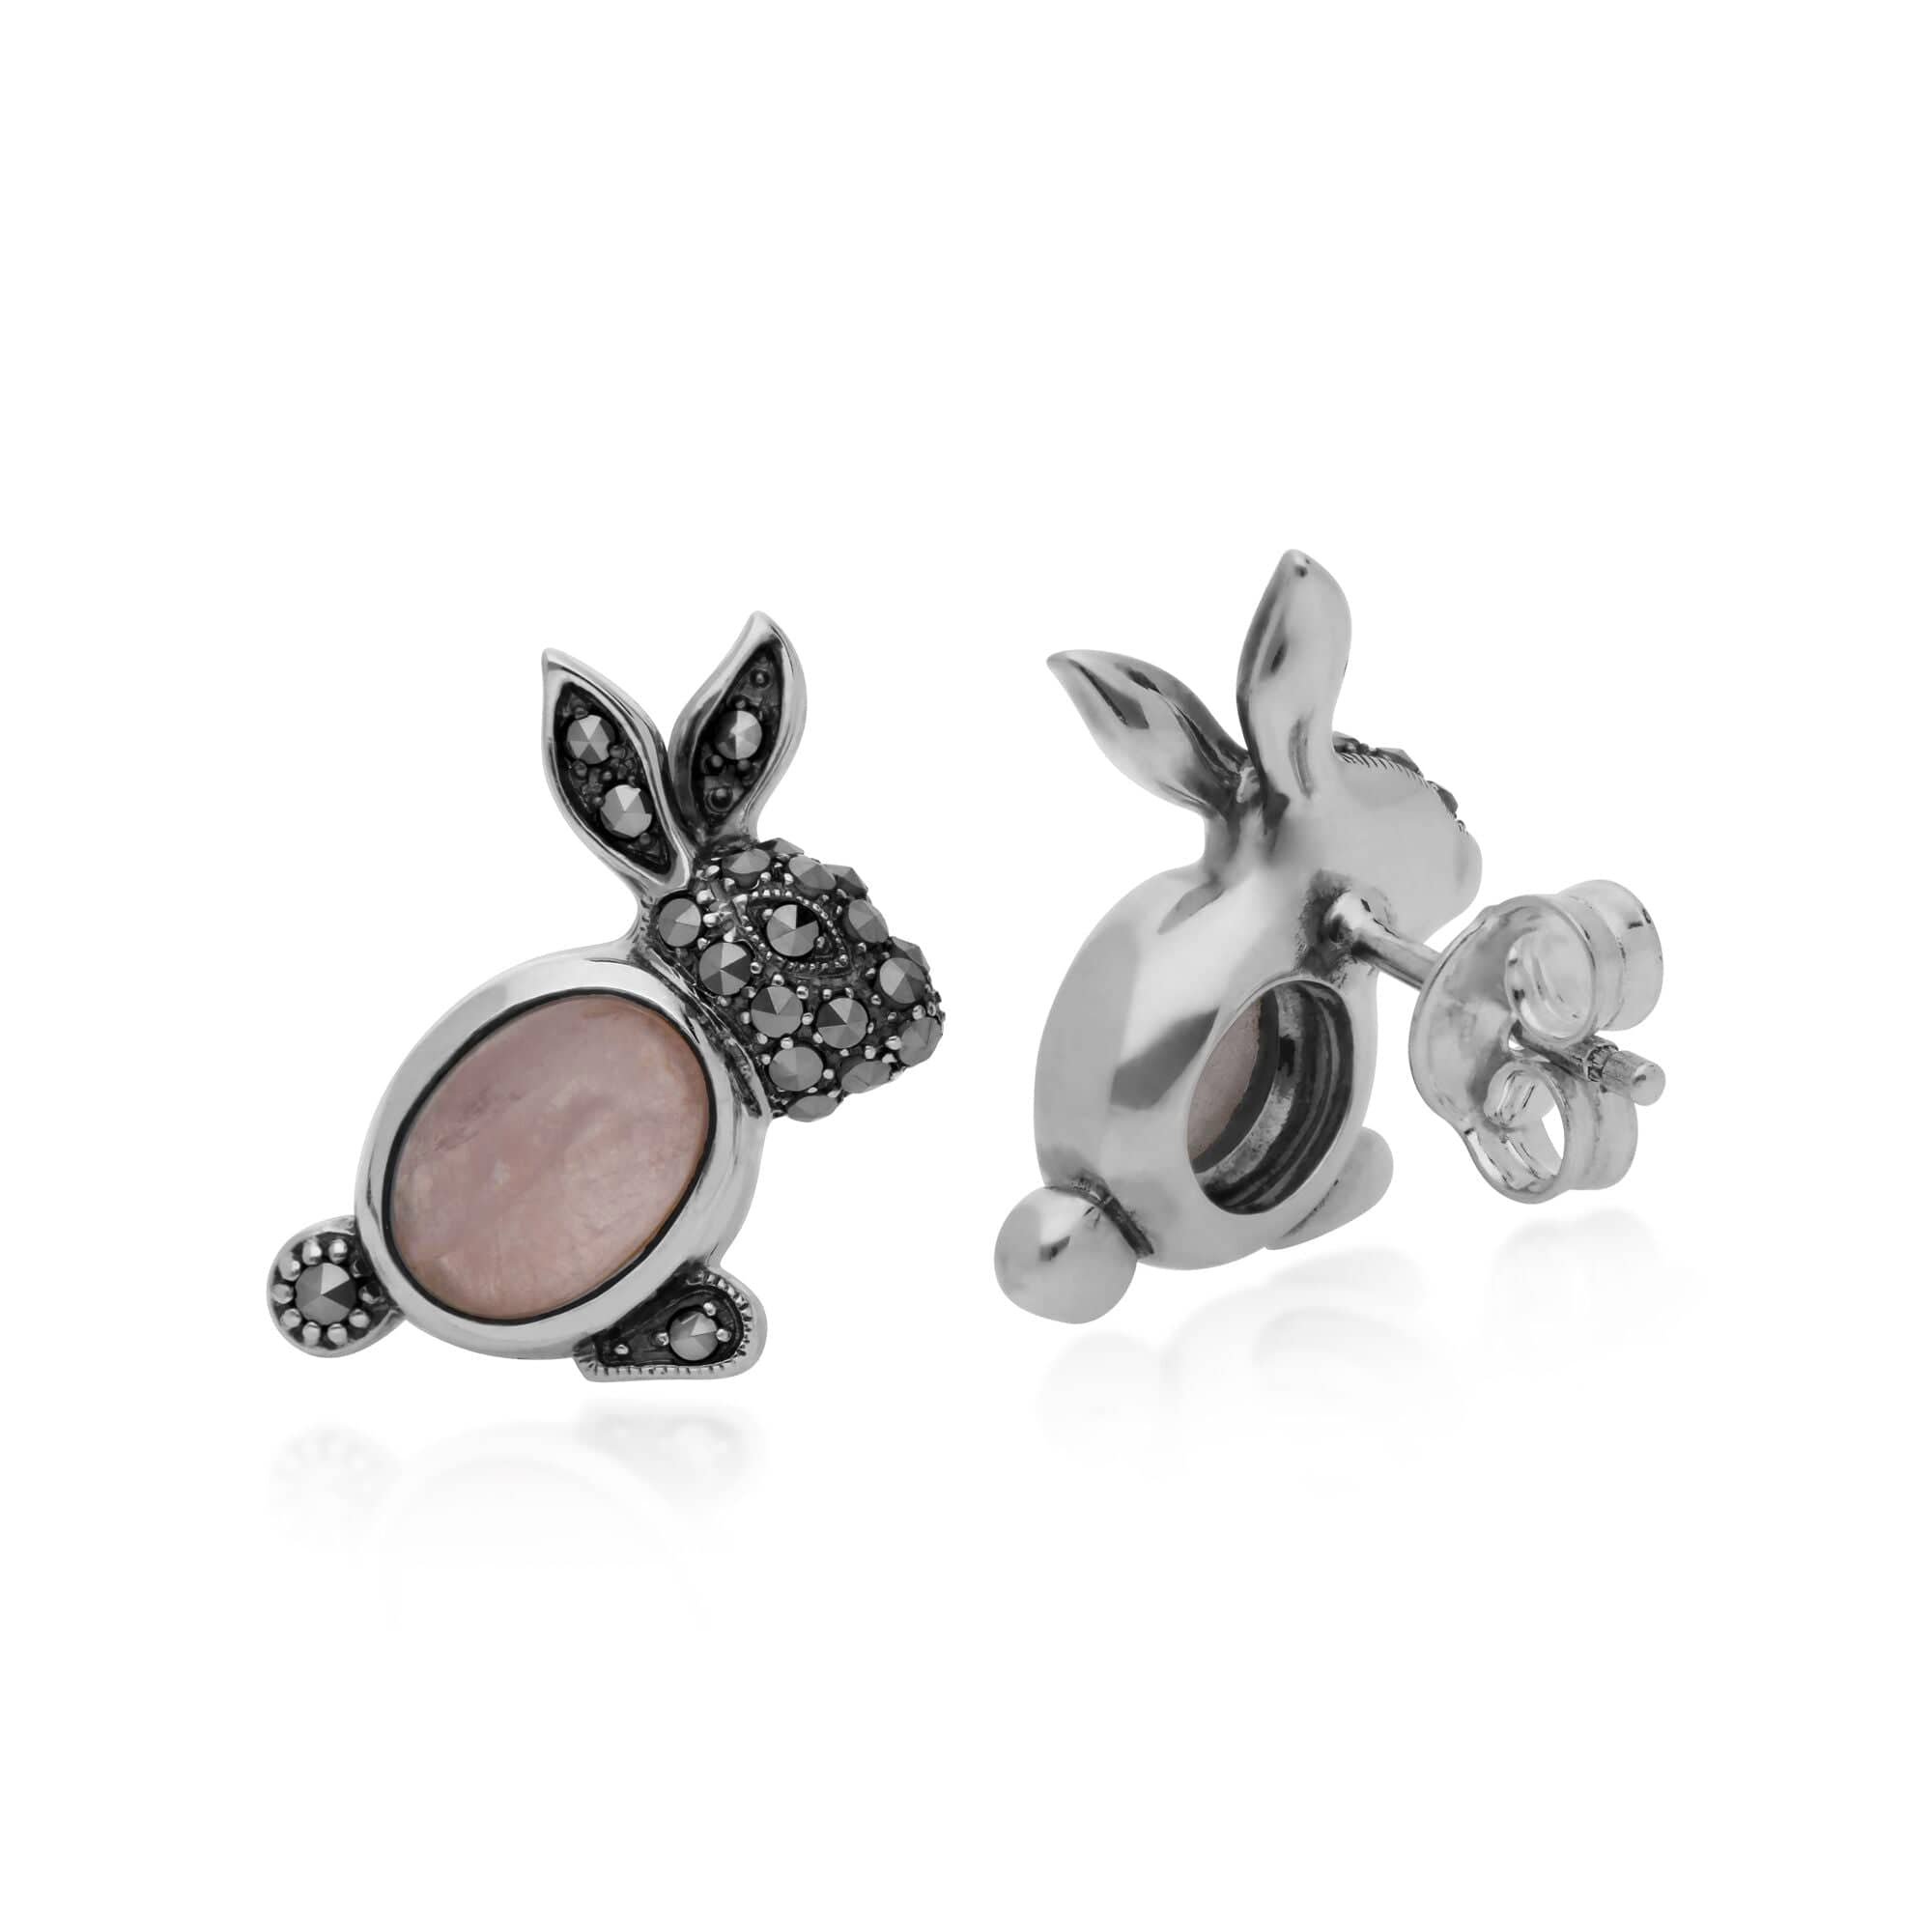 Gemondo Sterling Silver Rose Quartz & Marcasite Rabbit Stud Earrings - Gemondo